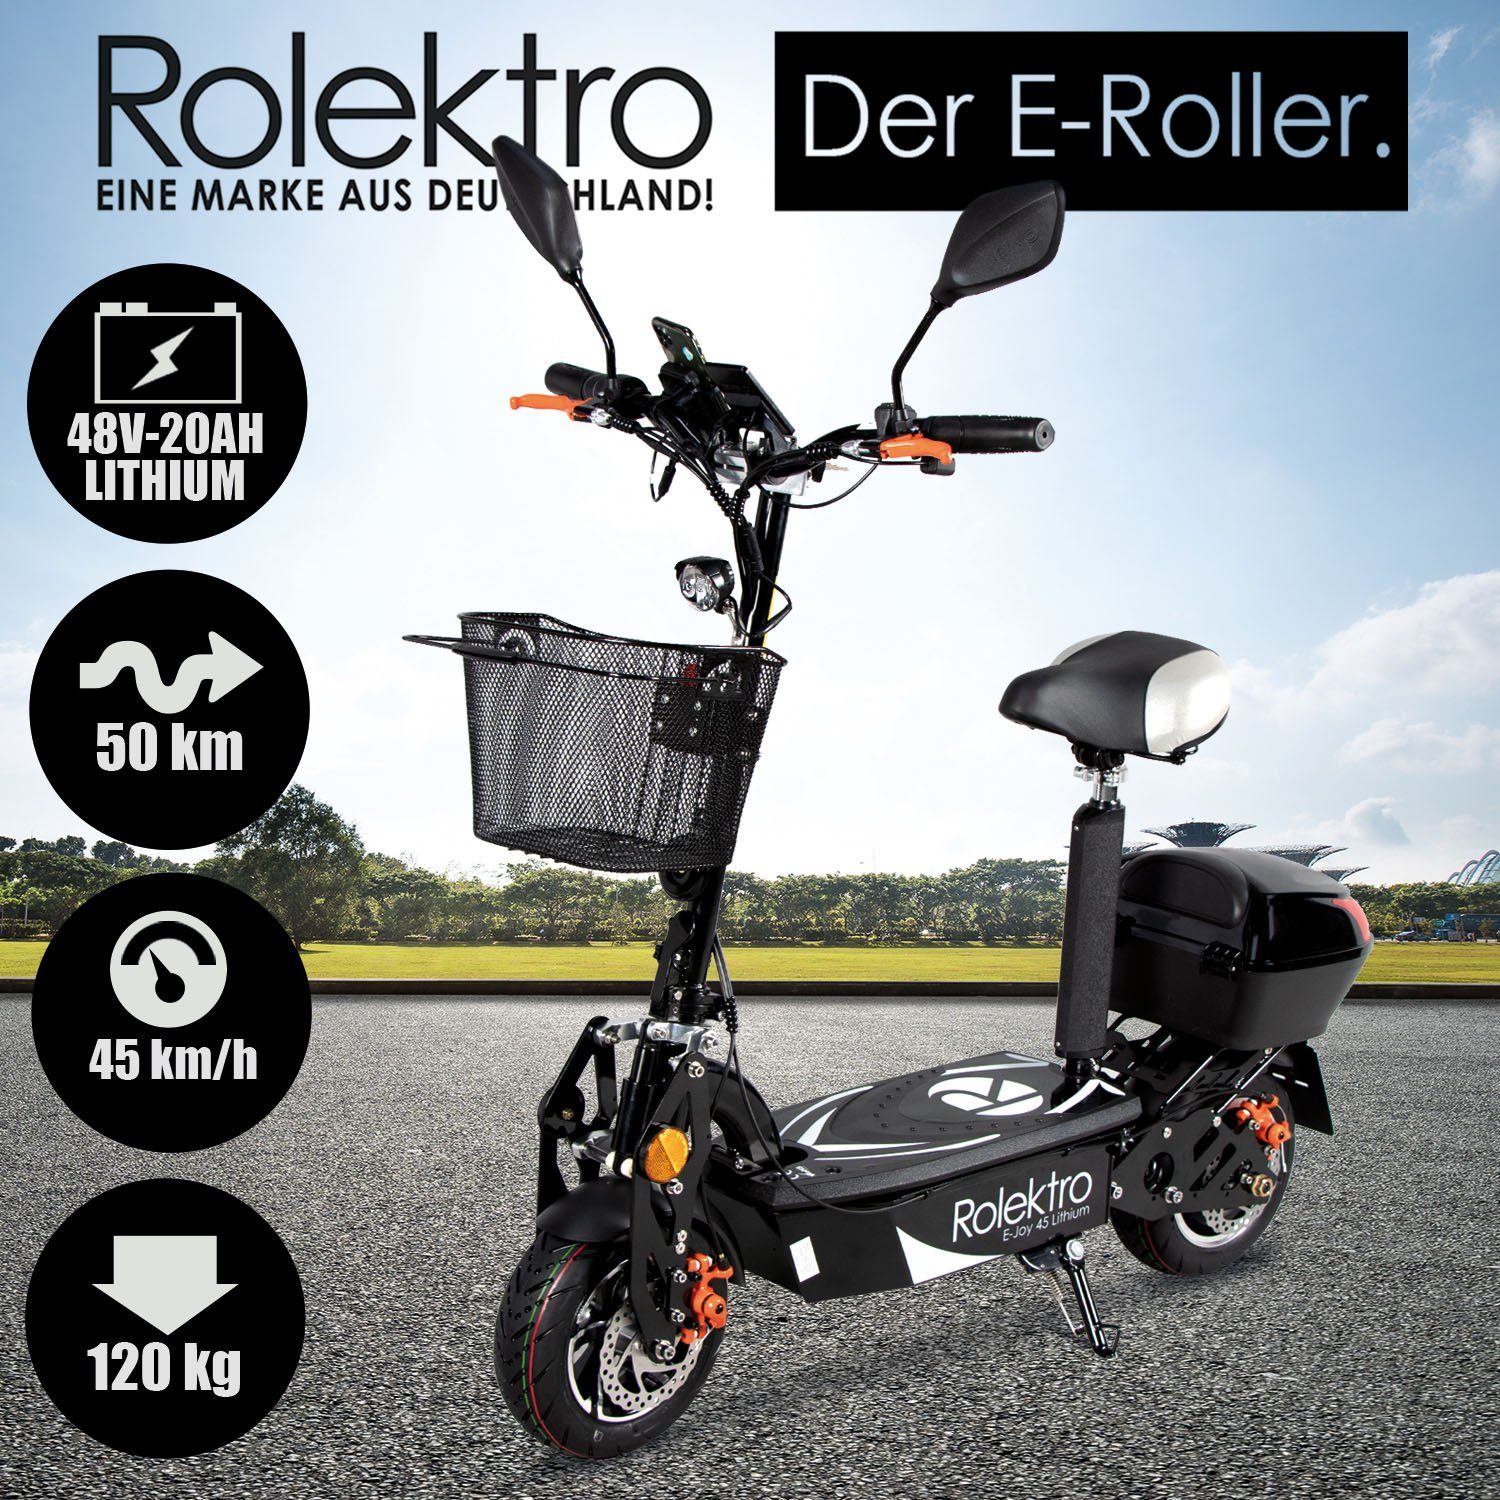 E-Mofaroller E-Joy km/h Rolektro W, 1000 45 45 Lithium, Rolektro